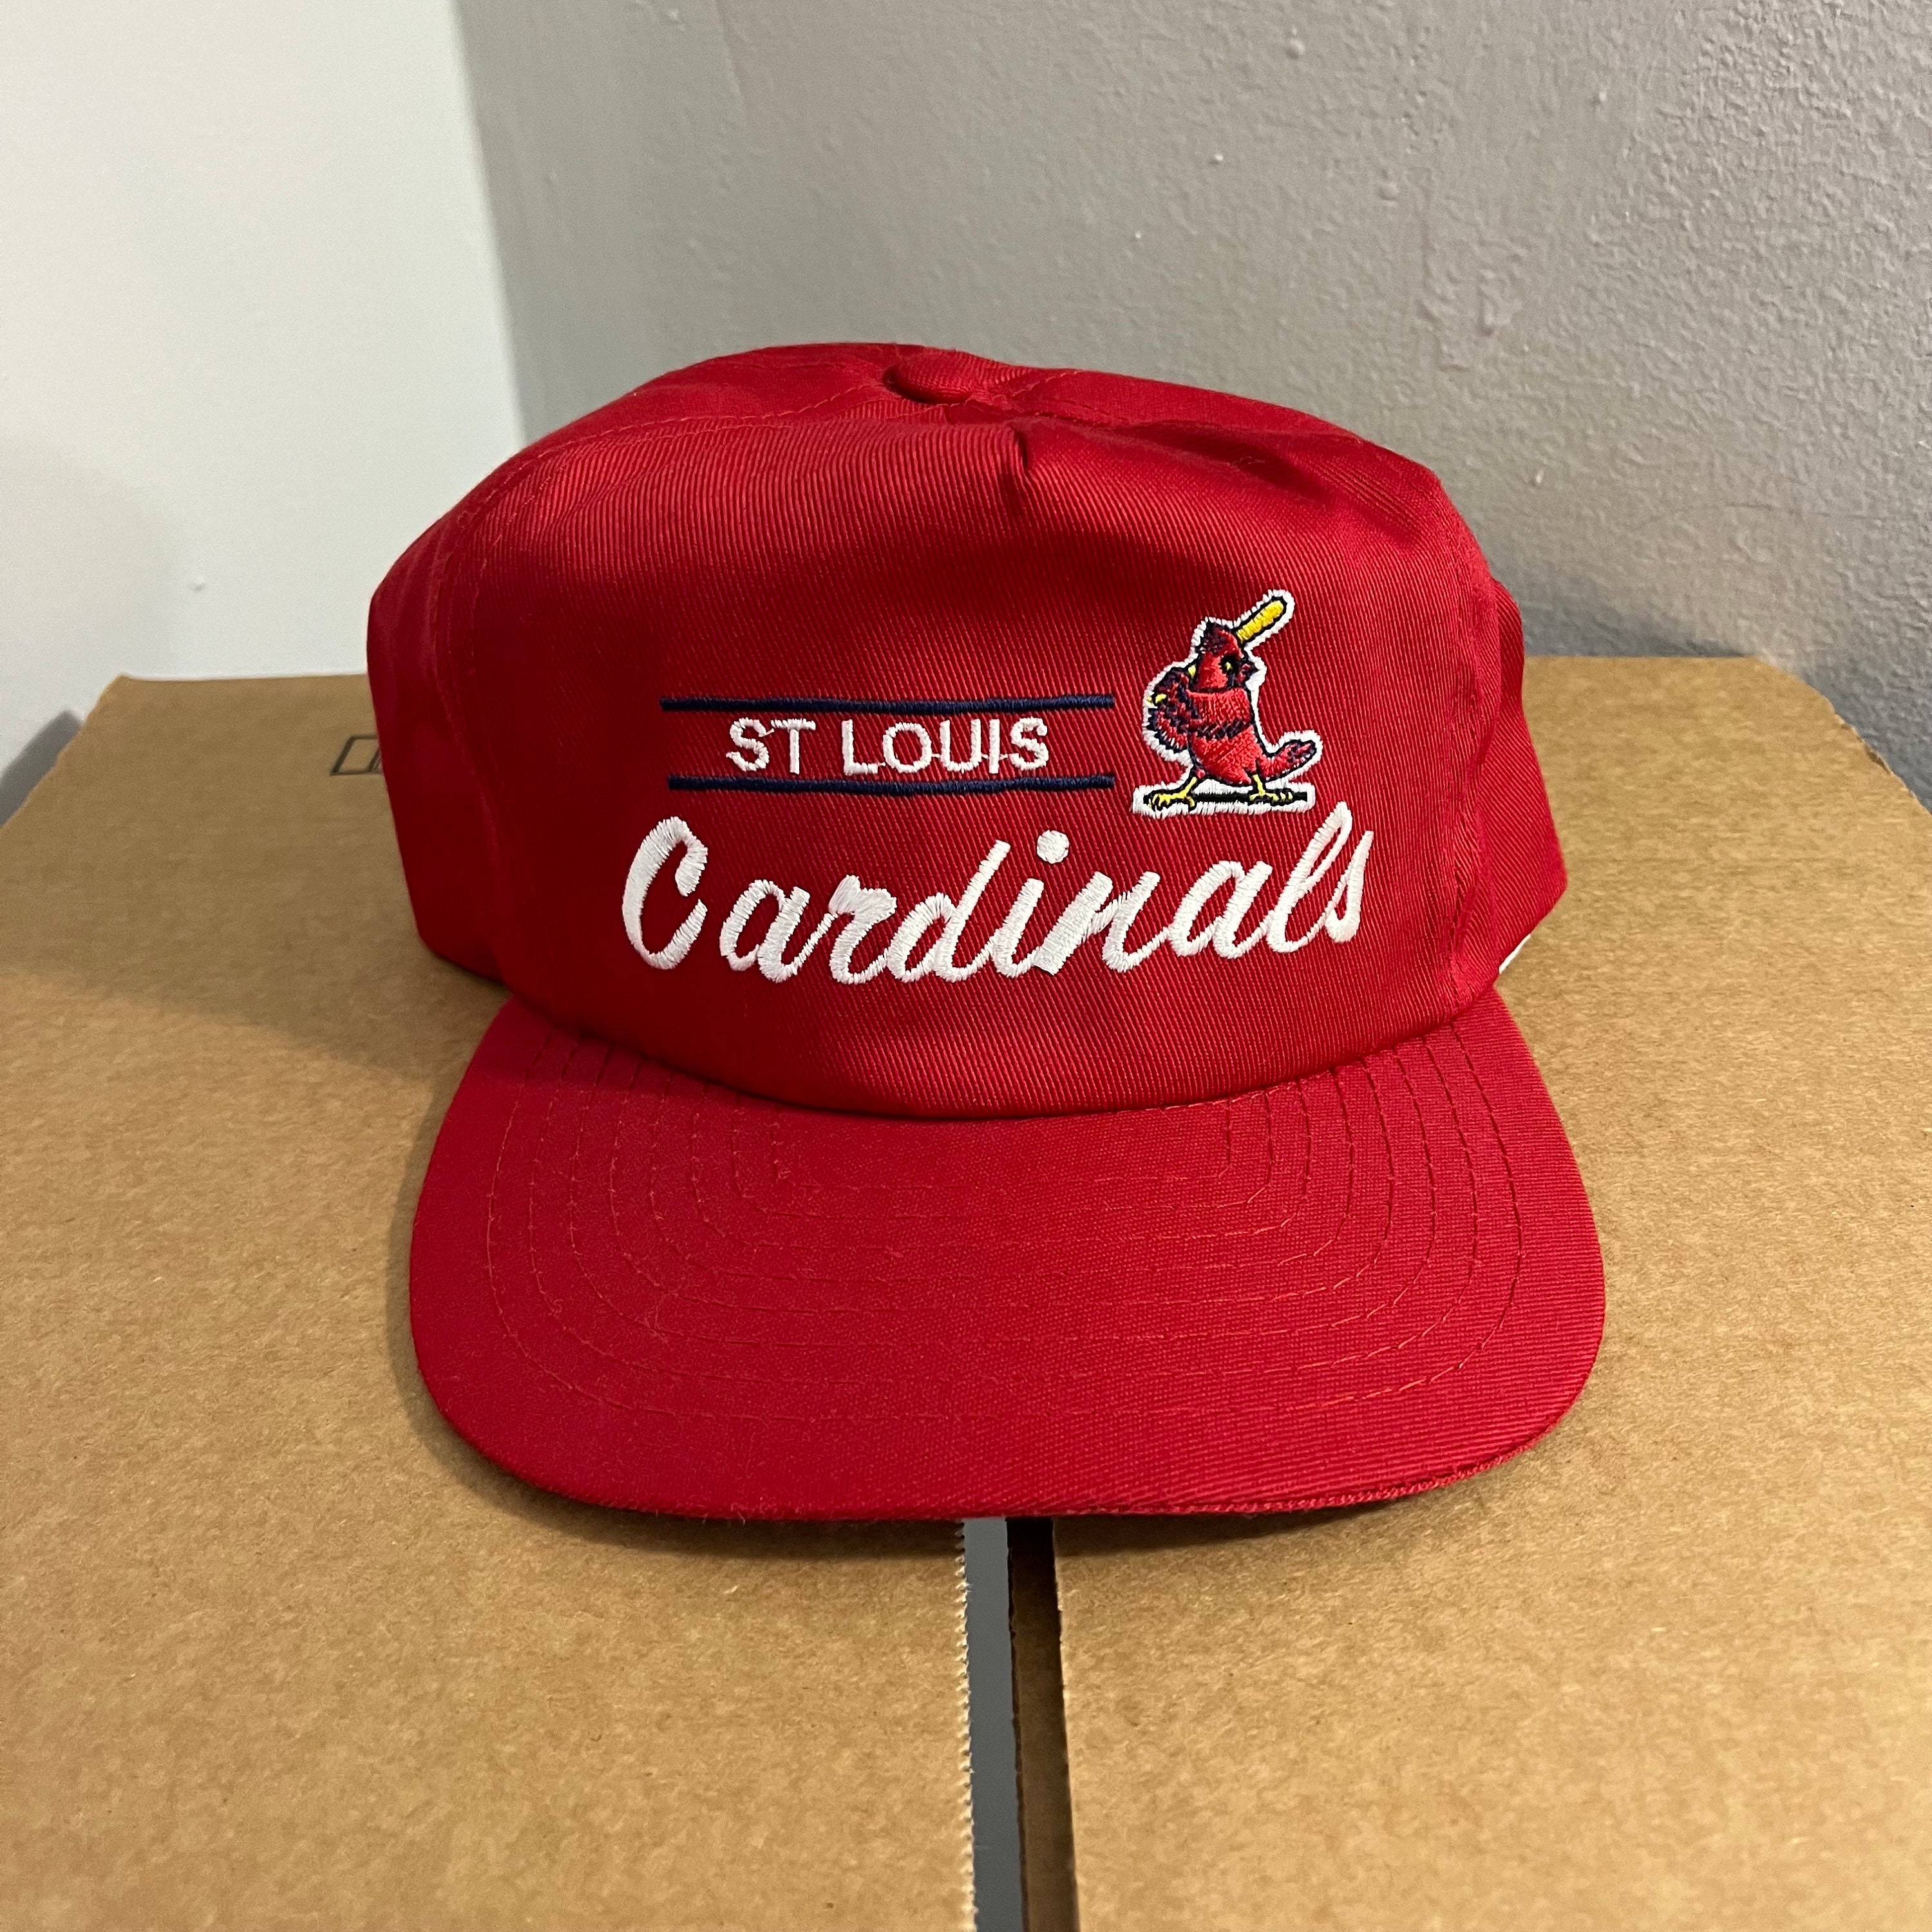  University Louisville Hat Classic Adjustable Cardinals Mesh  Trucker Cap : Sports & Outdoors